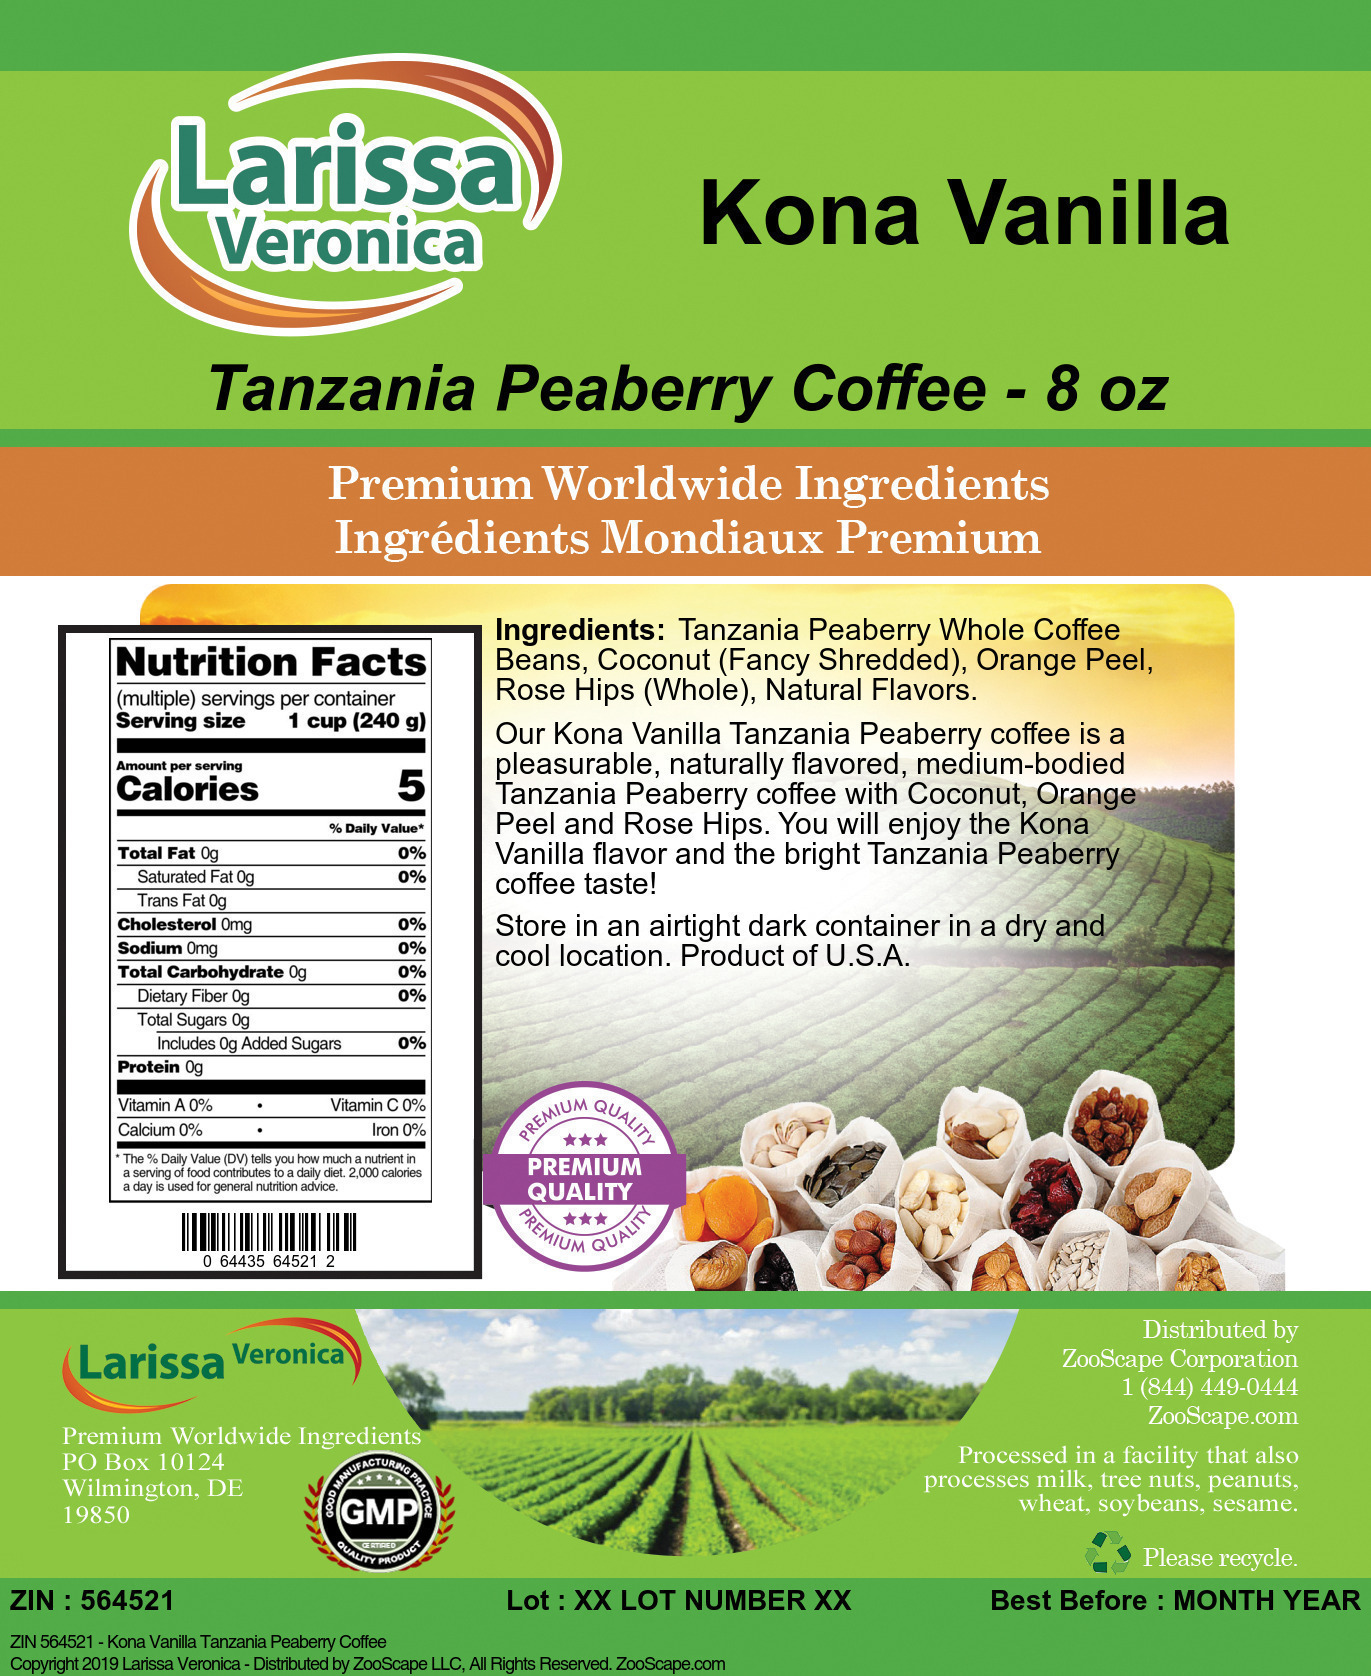 Kona Vanilla Tanzania Peaberry Coffee - Label